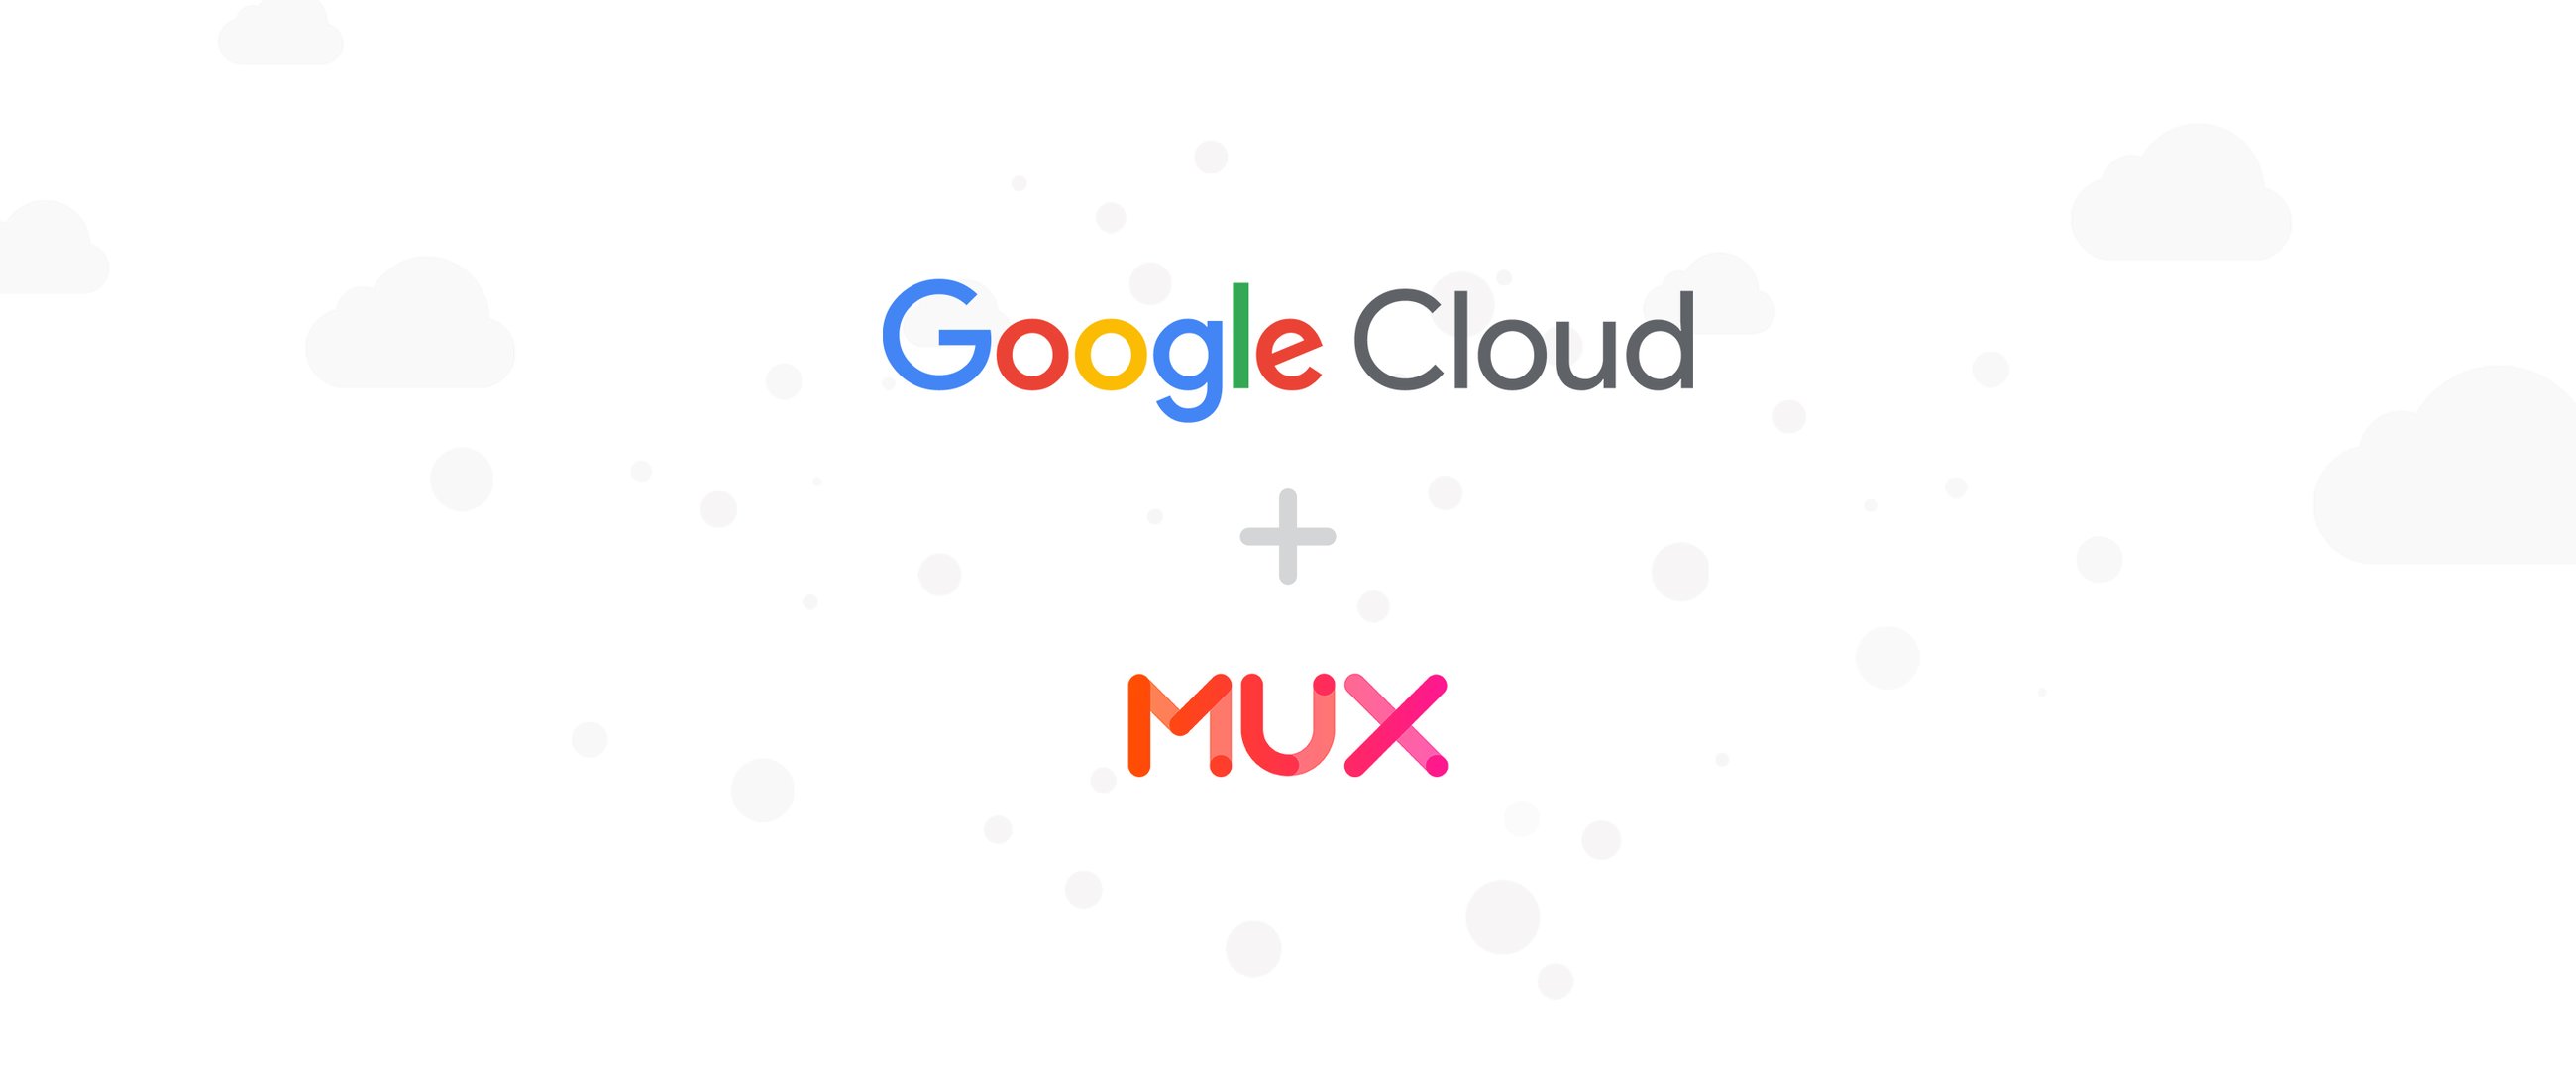 https://storage.googleapis.com/gweb-cloudblog-publish/images/google_cloud_x_mux.max-2600x2600.jpg